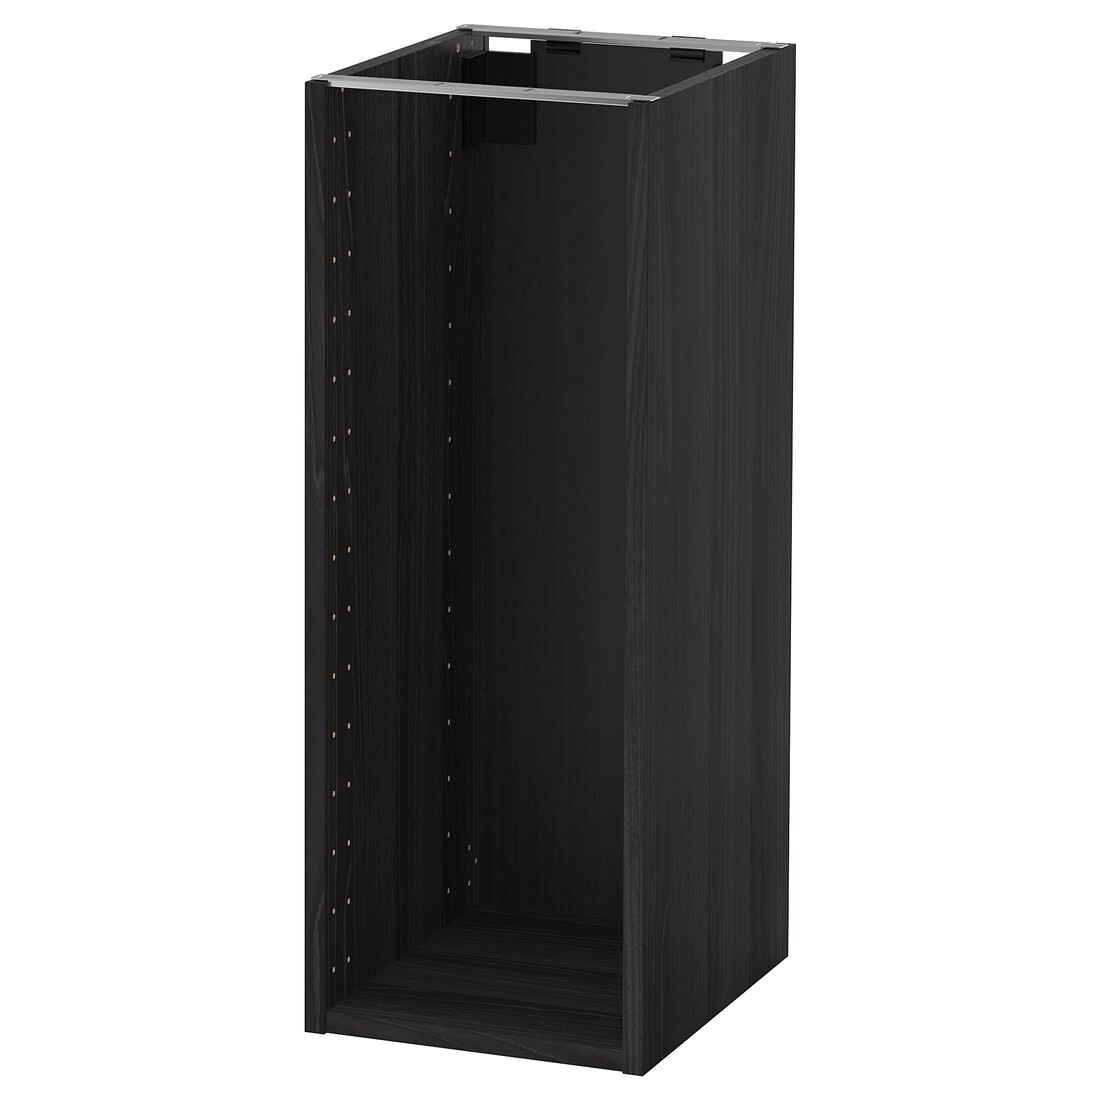 IKEA METOD МЕТОД Каркас напольного шкафа, имитация дерева черный, 30x37x80 см 60417185 604.171.85